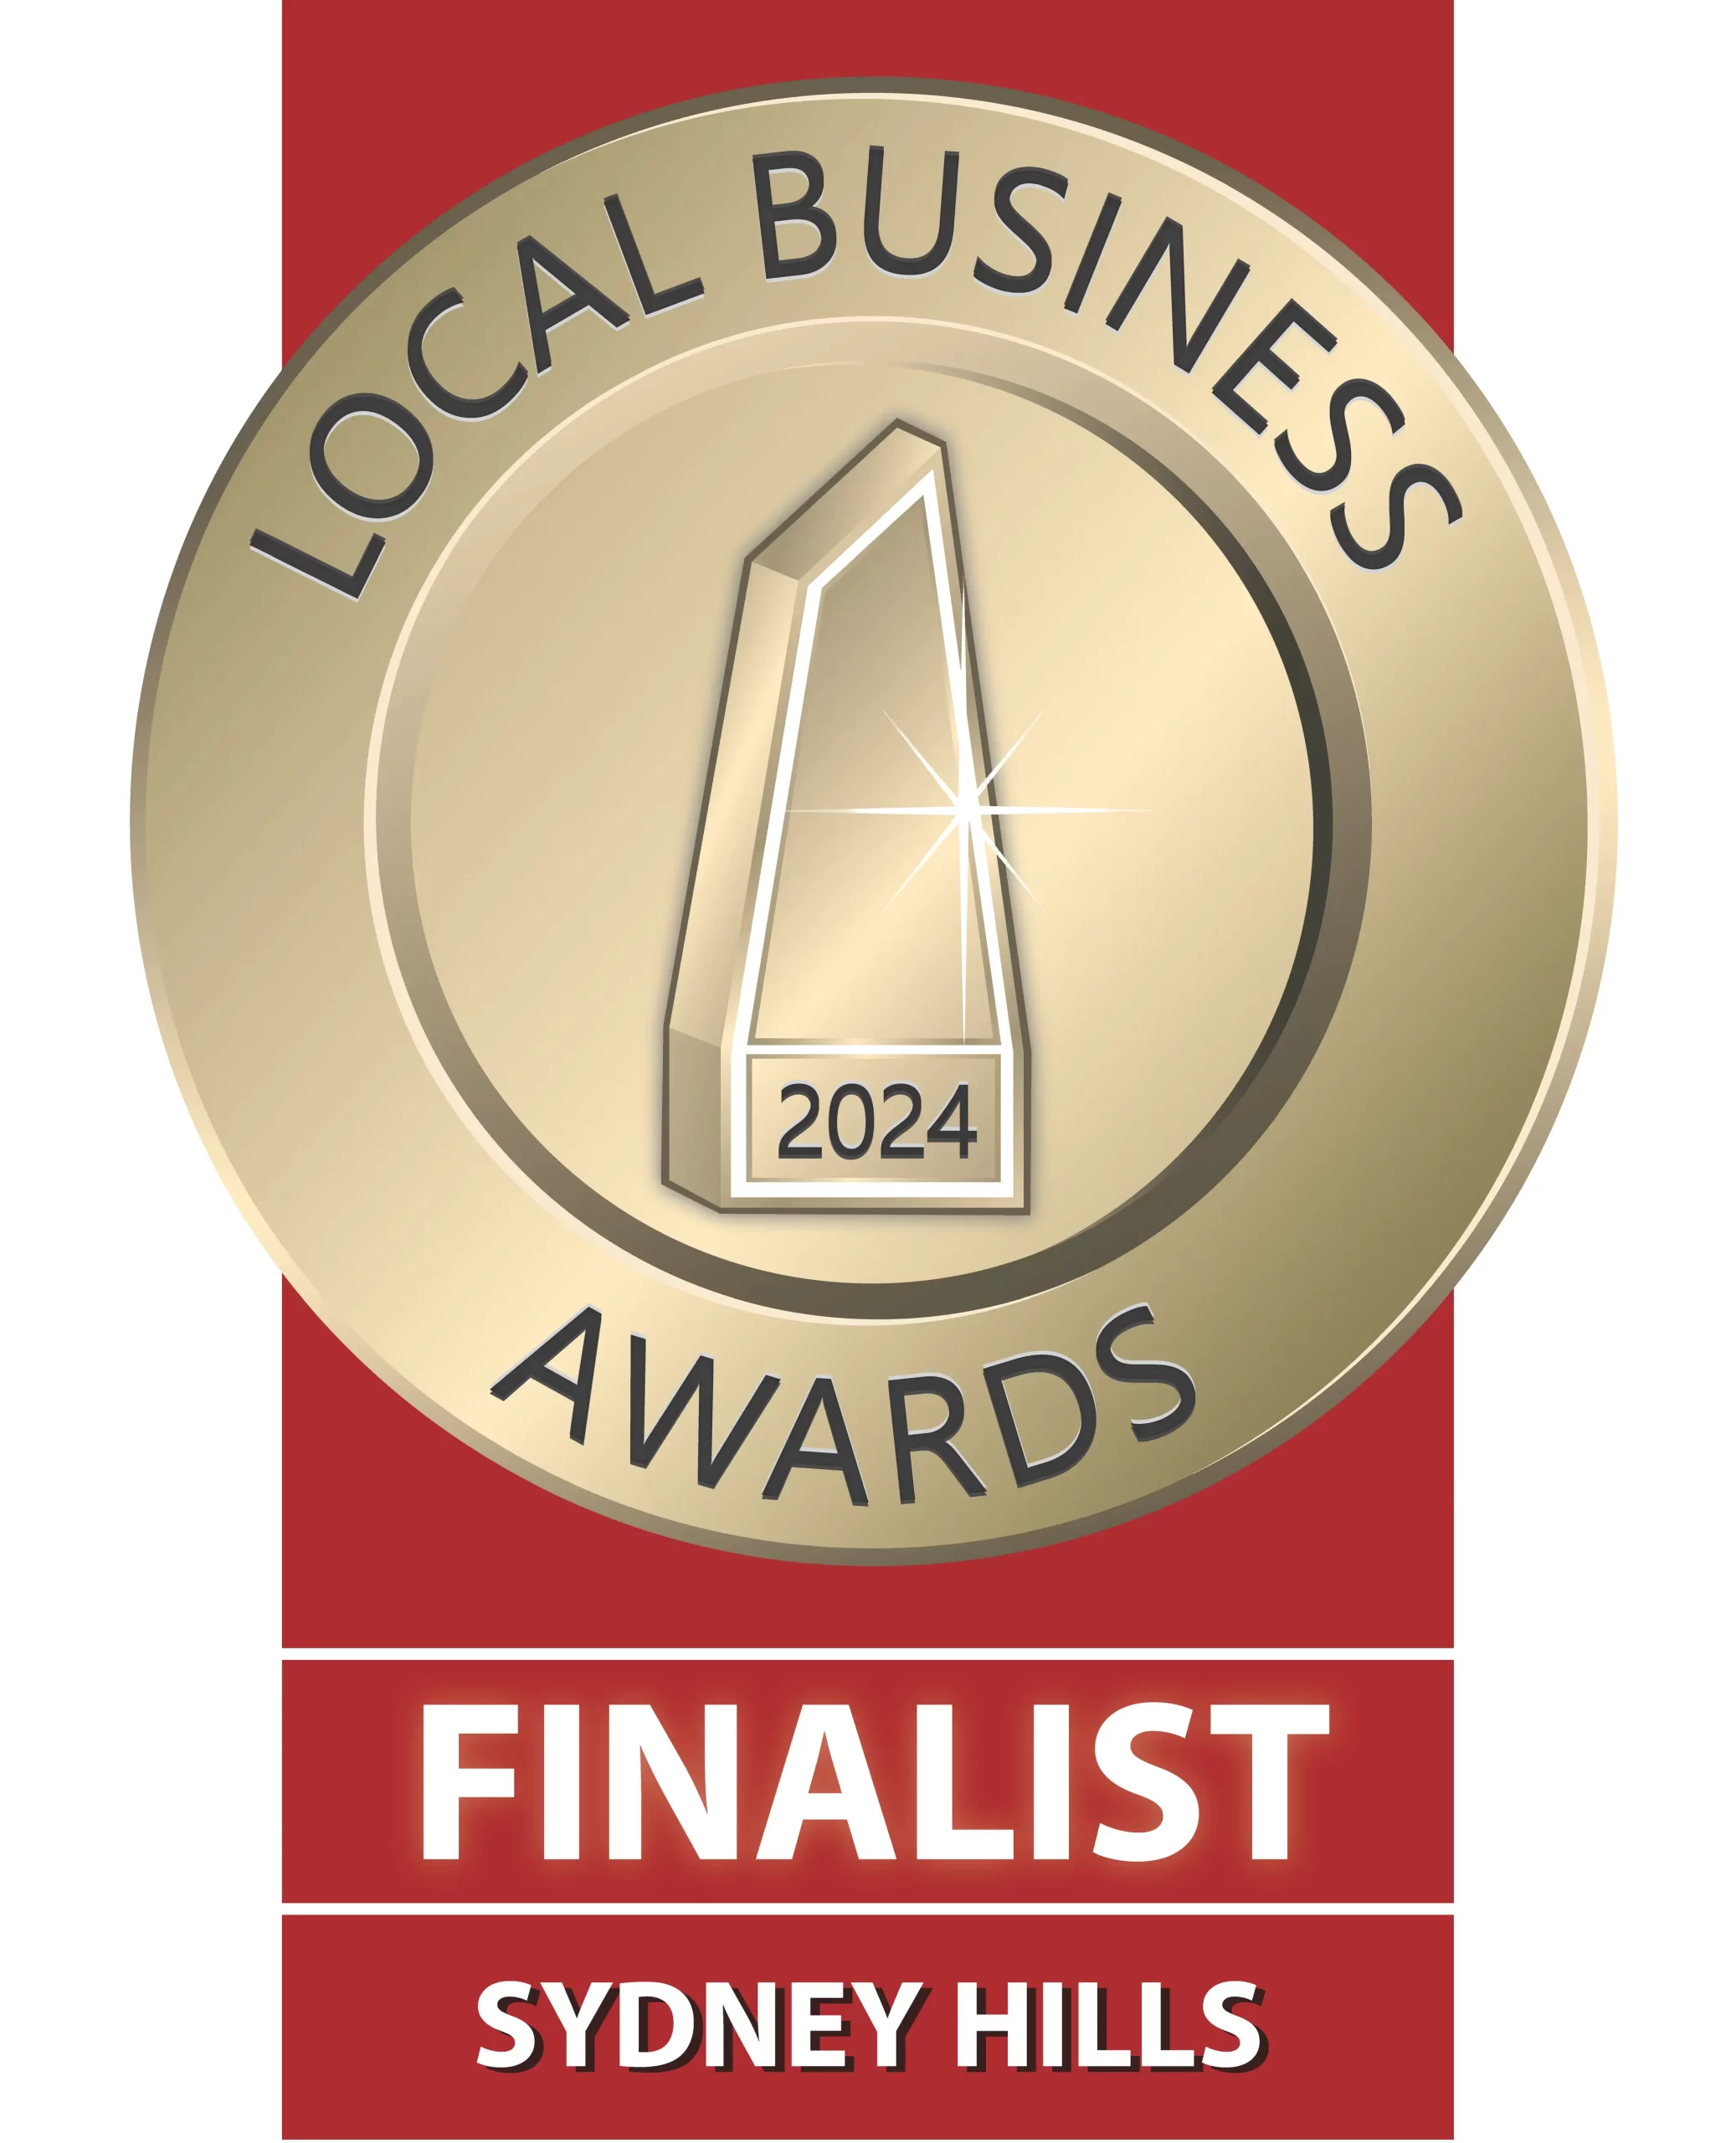 2024 Sydney Hills Local Business Awards Finalist